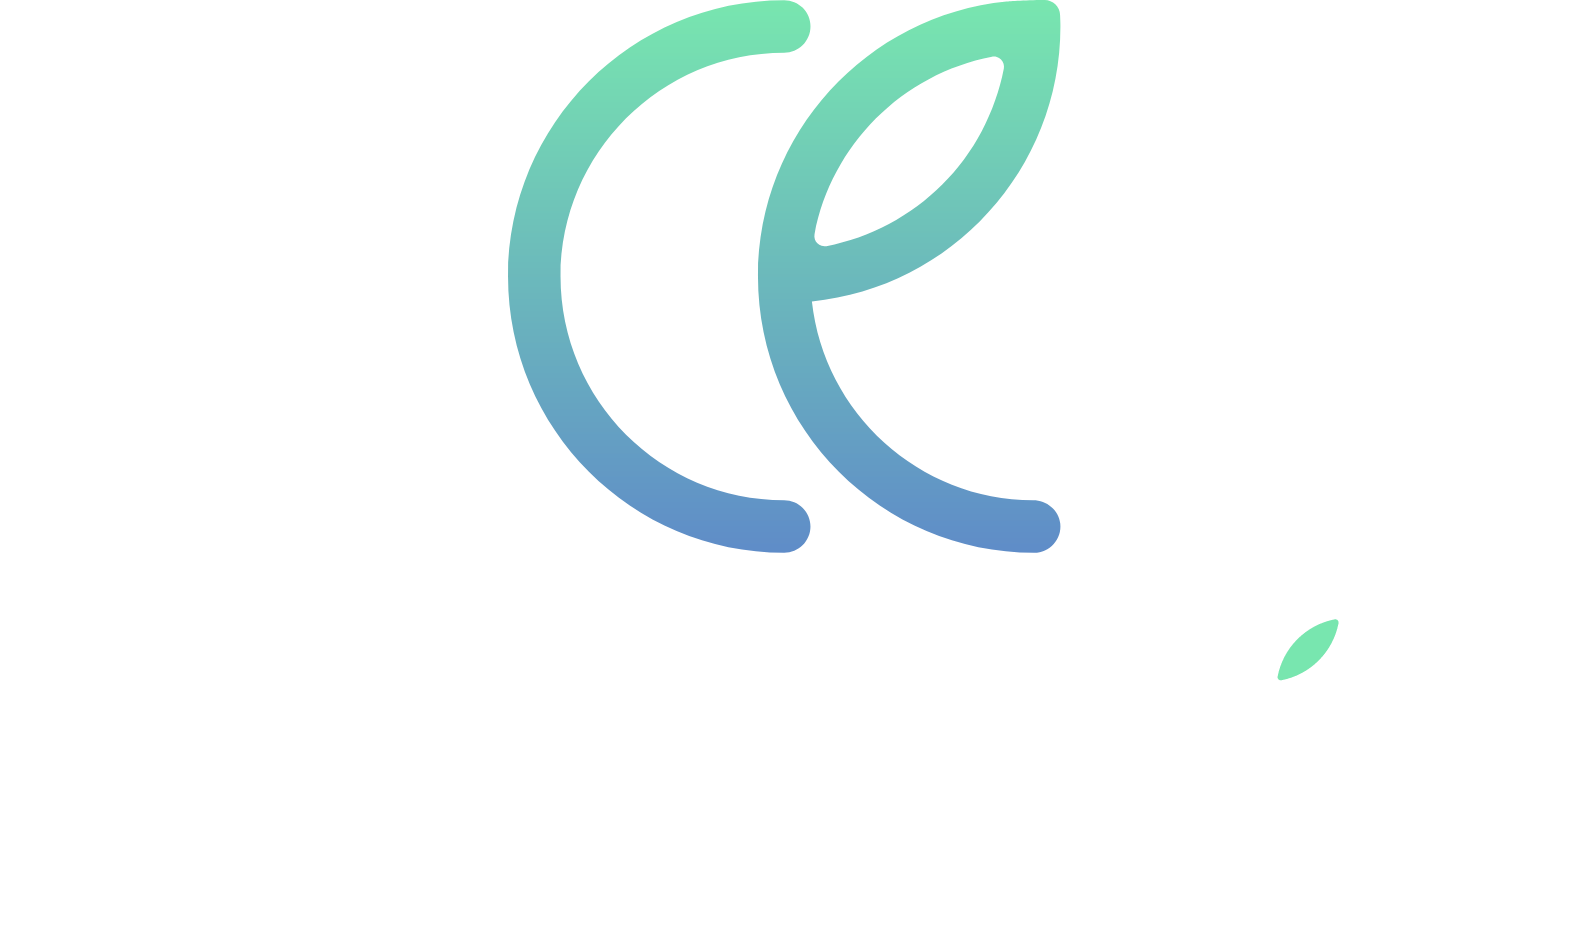 CropEnergies logo large for dark backgrounds (transparent PNG)